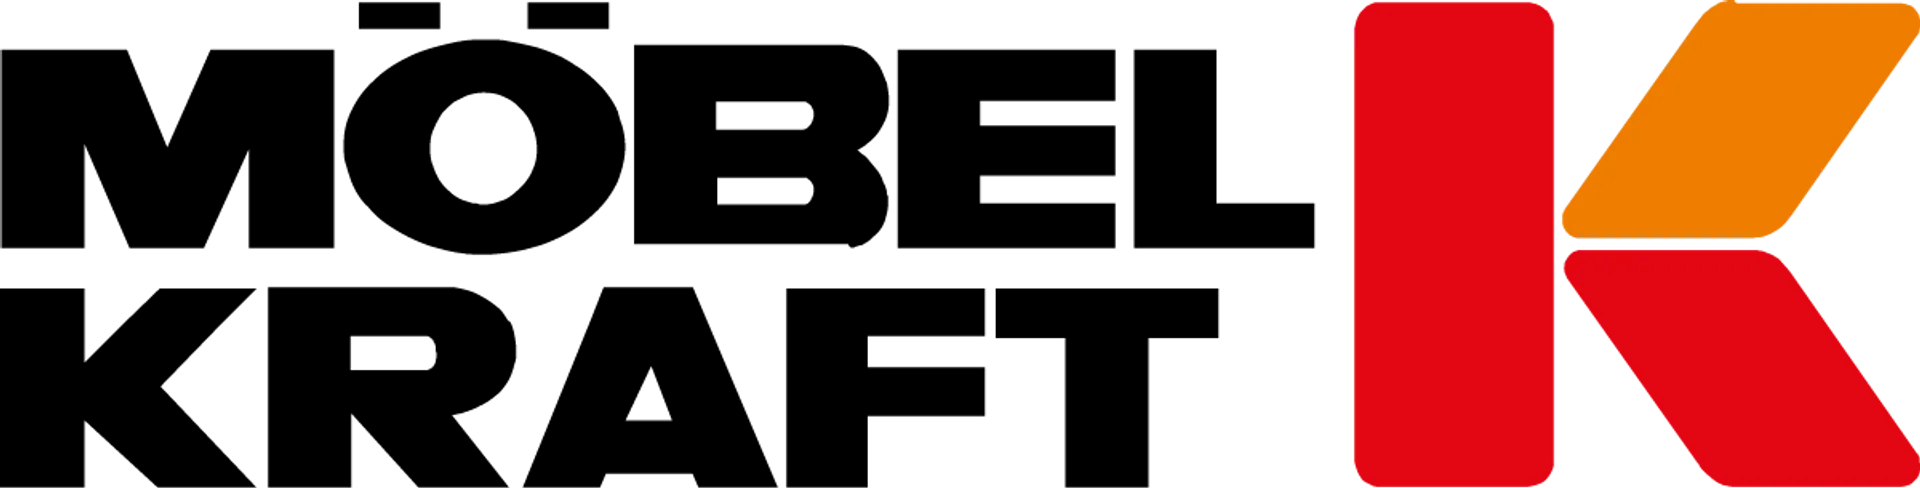 MÖBEL KRAFT logo